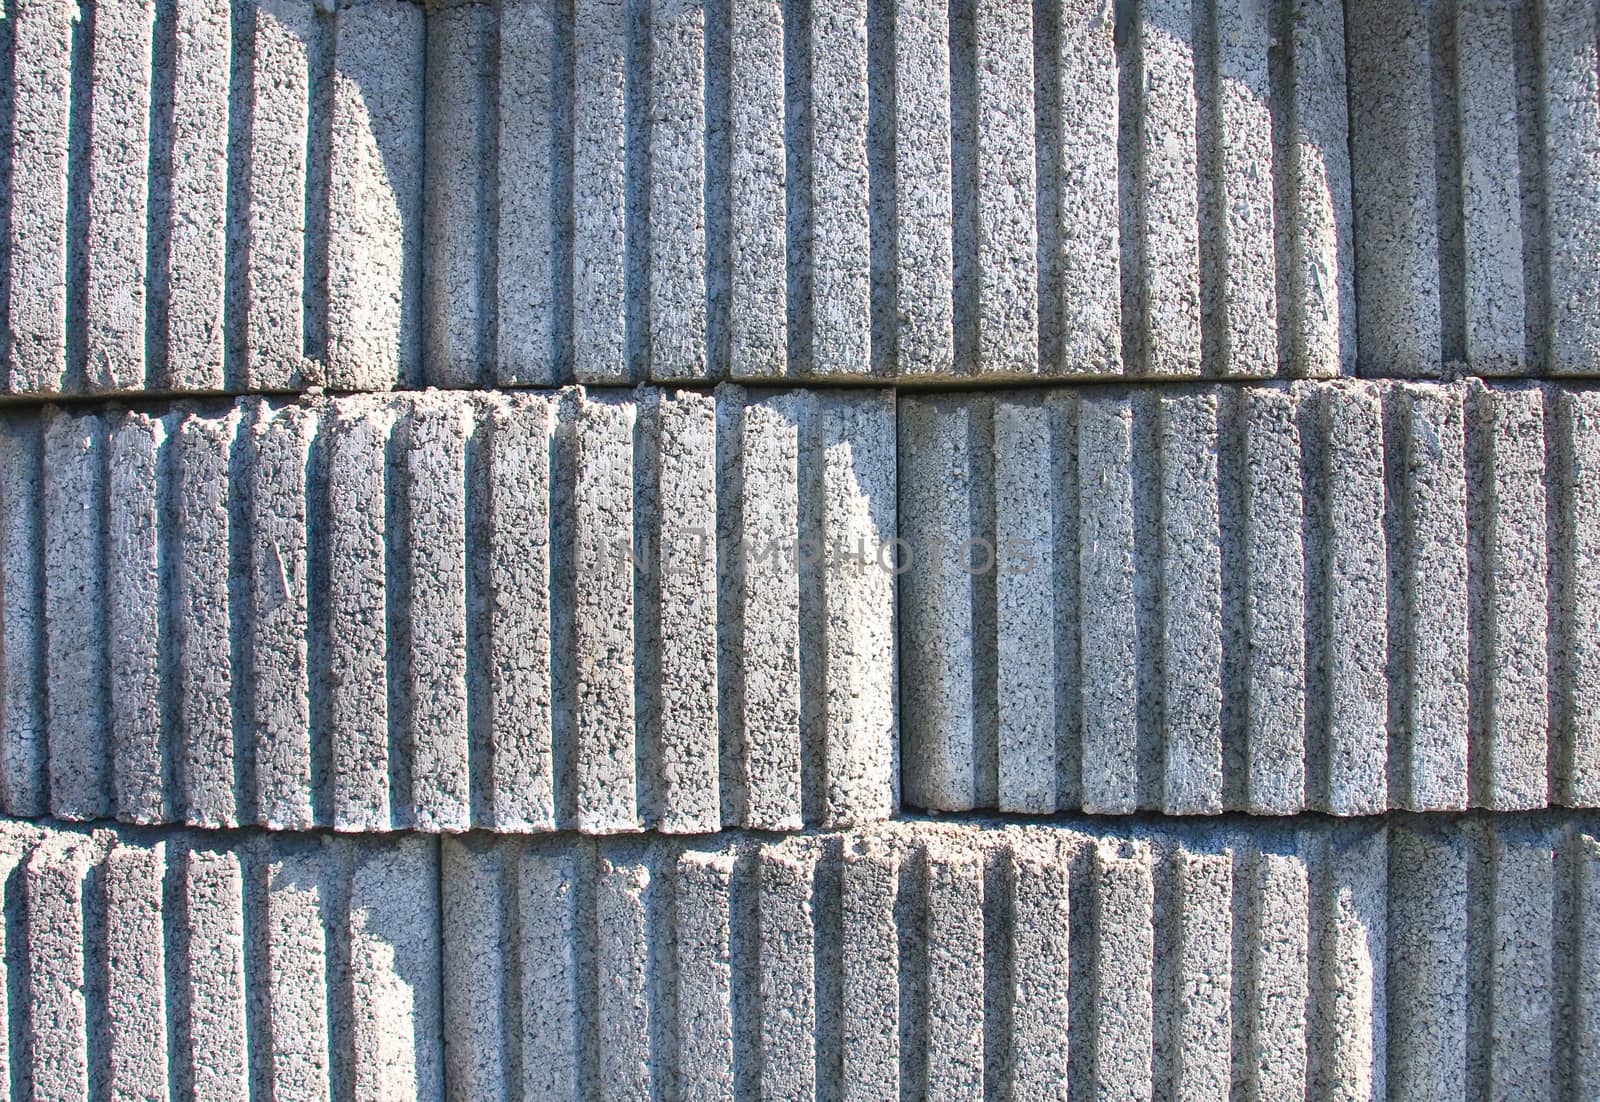 The masonry of concrete blocks